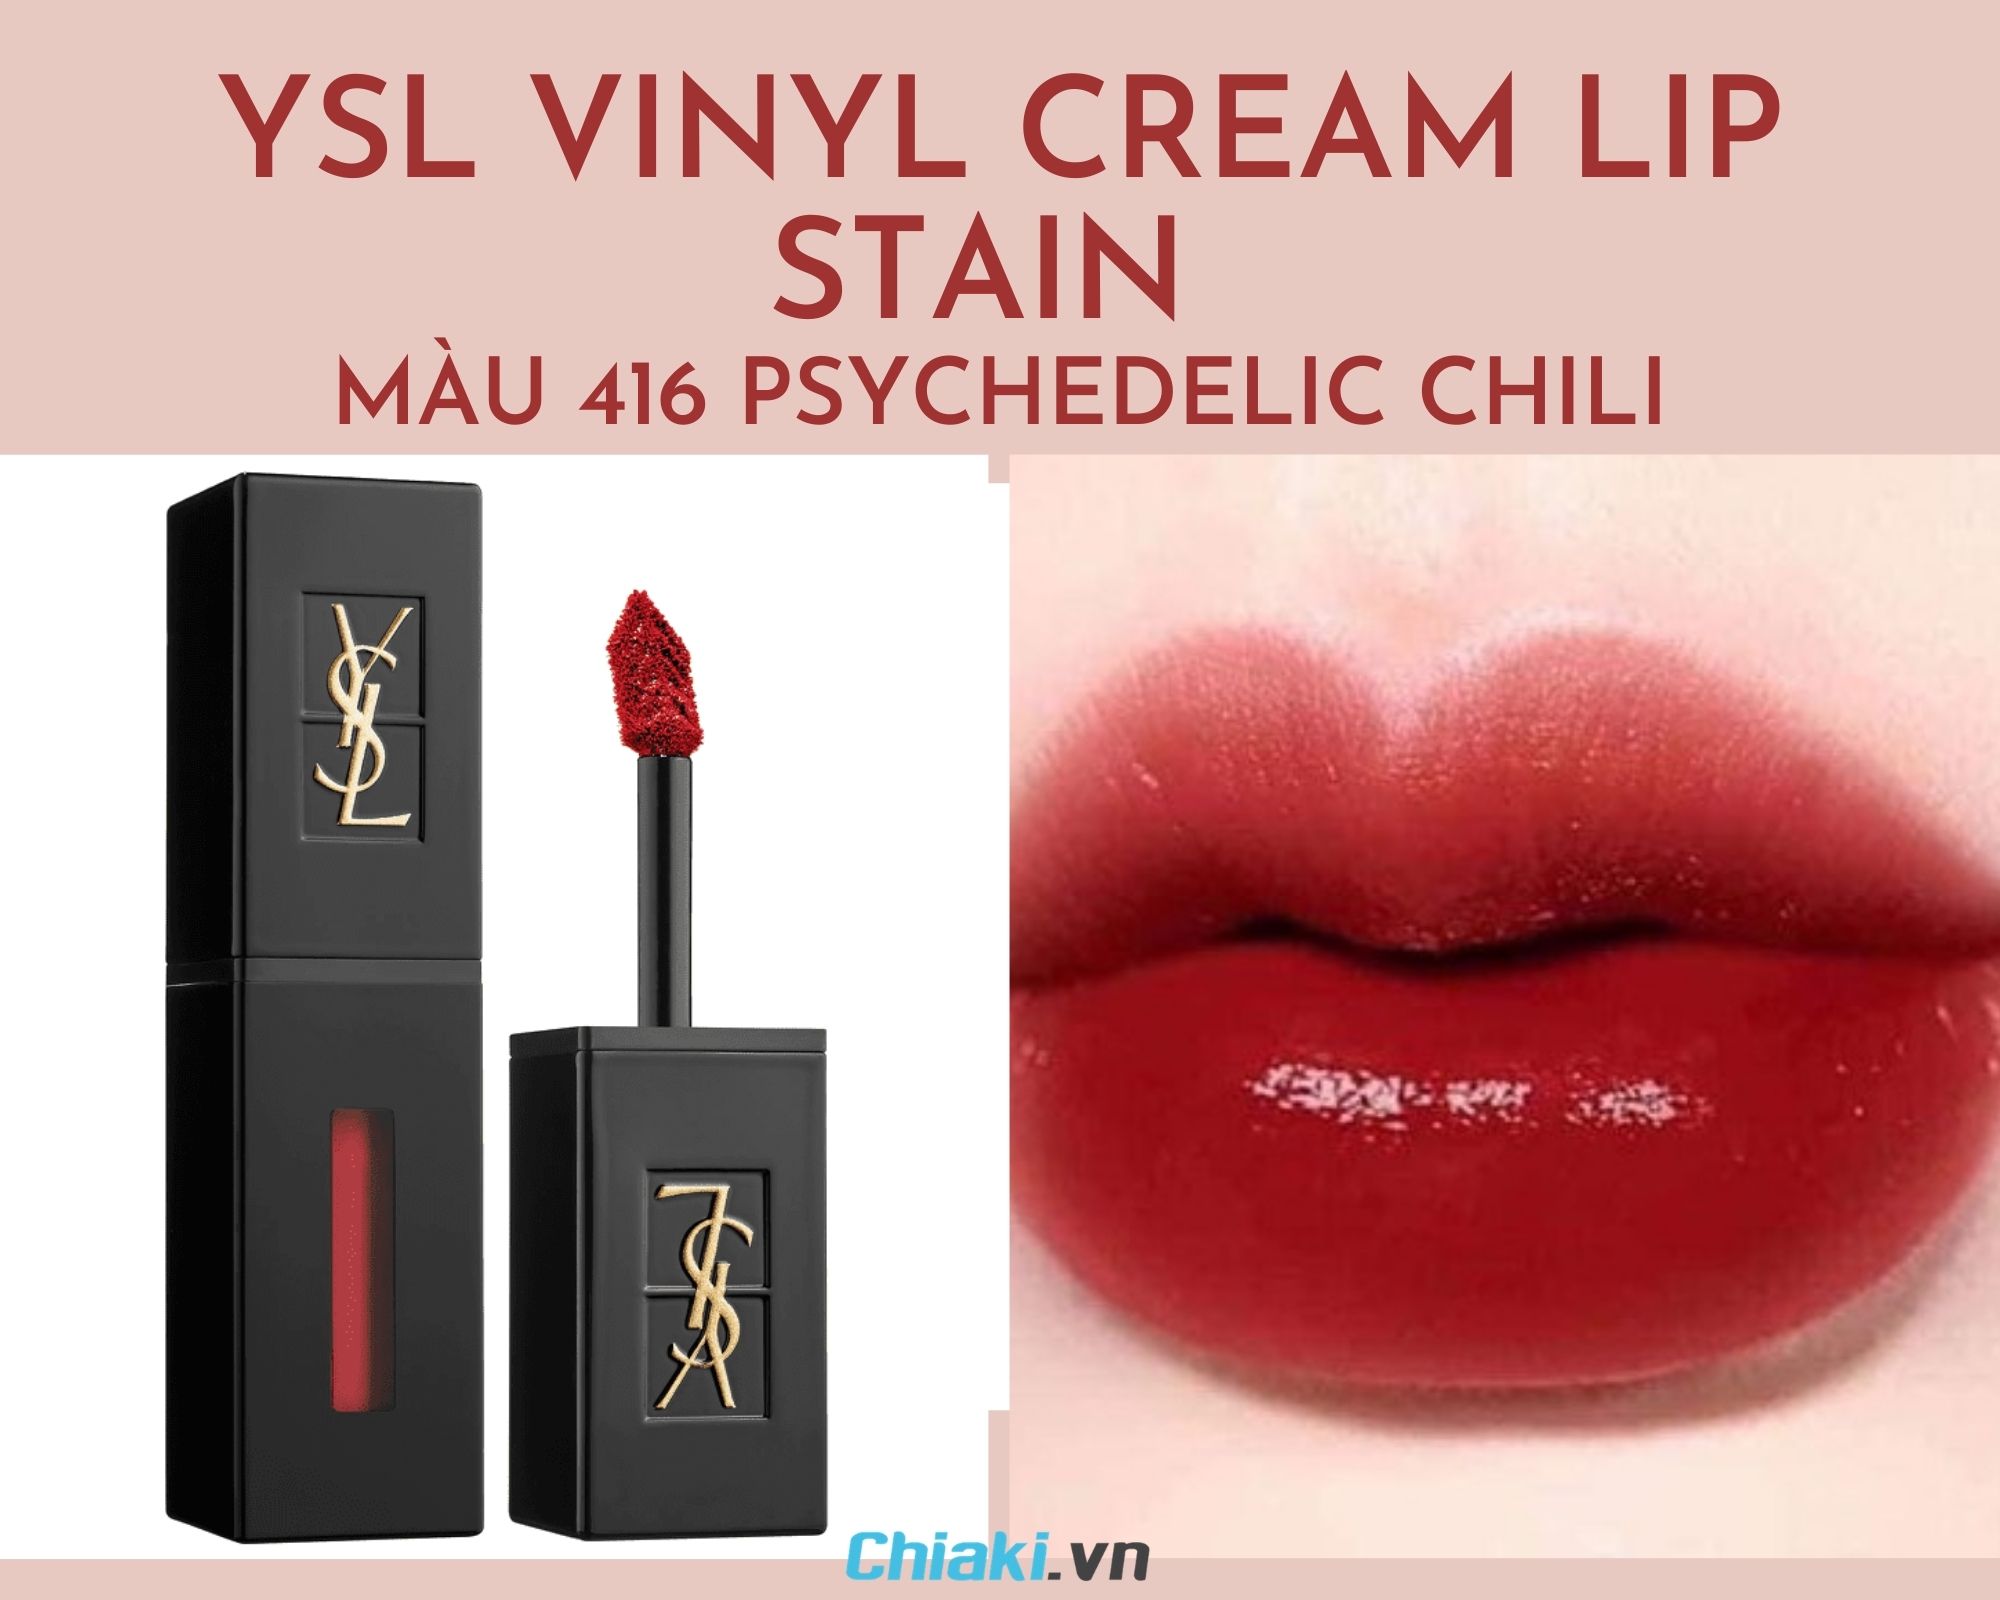 YSL Vinyl Cream Lip Stain Psychedelic Chili color son đỏ hỏn gạch